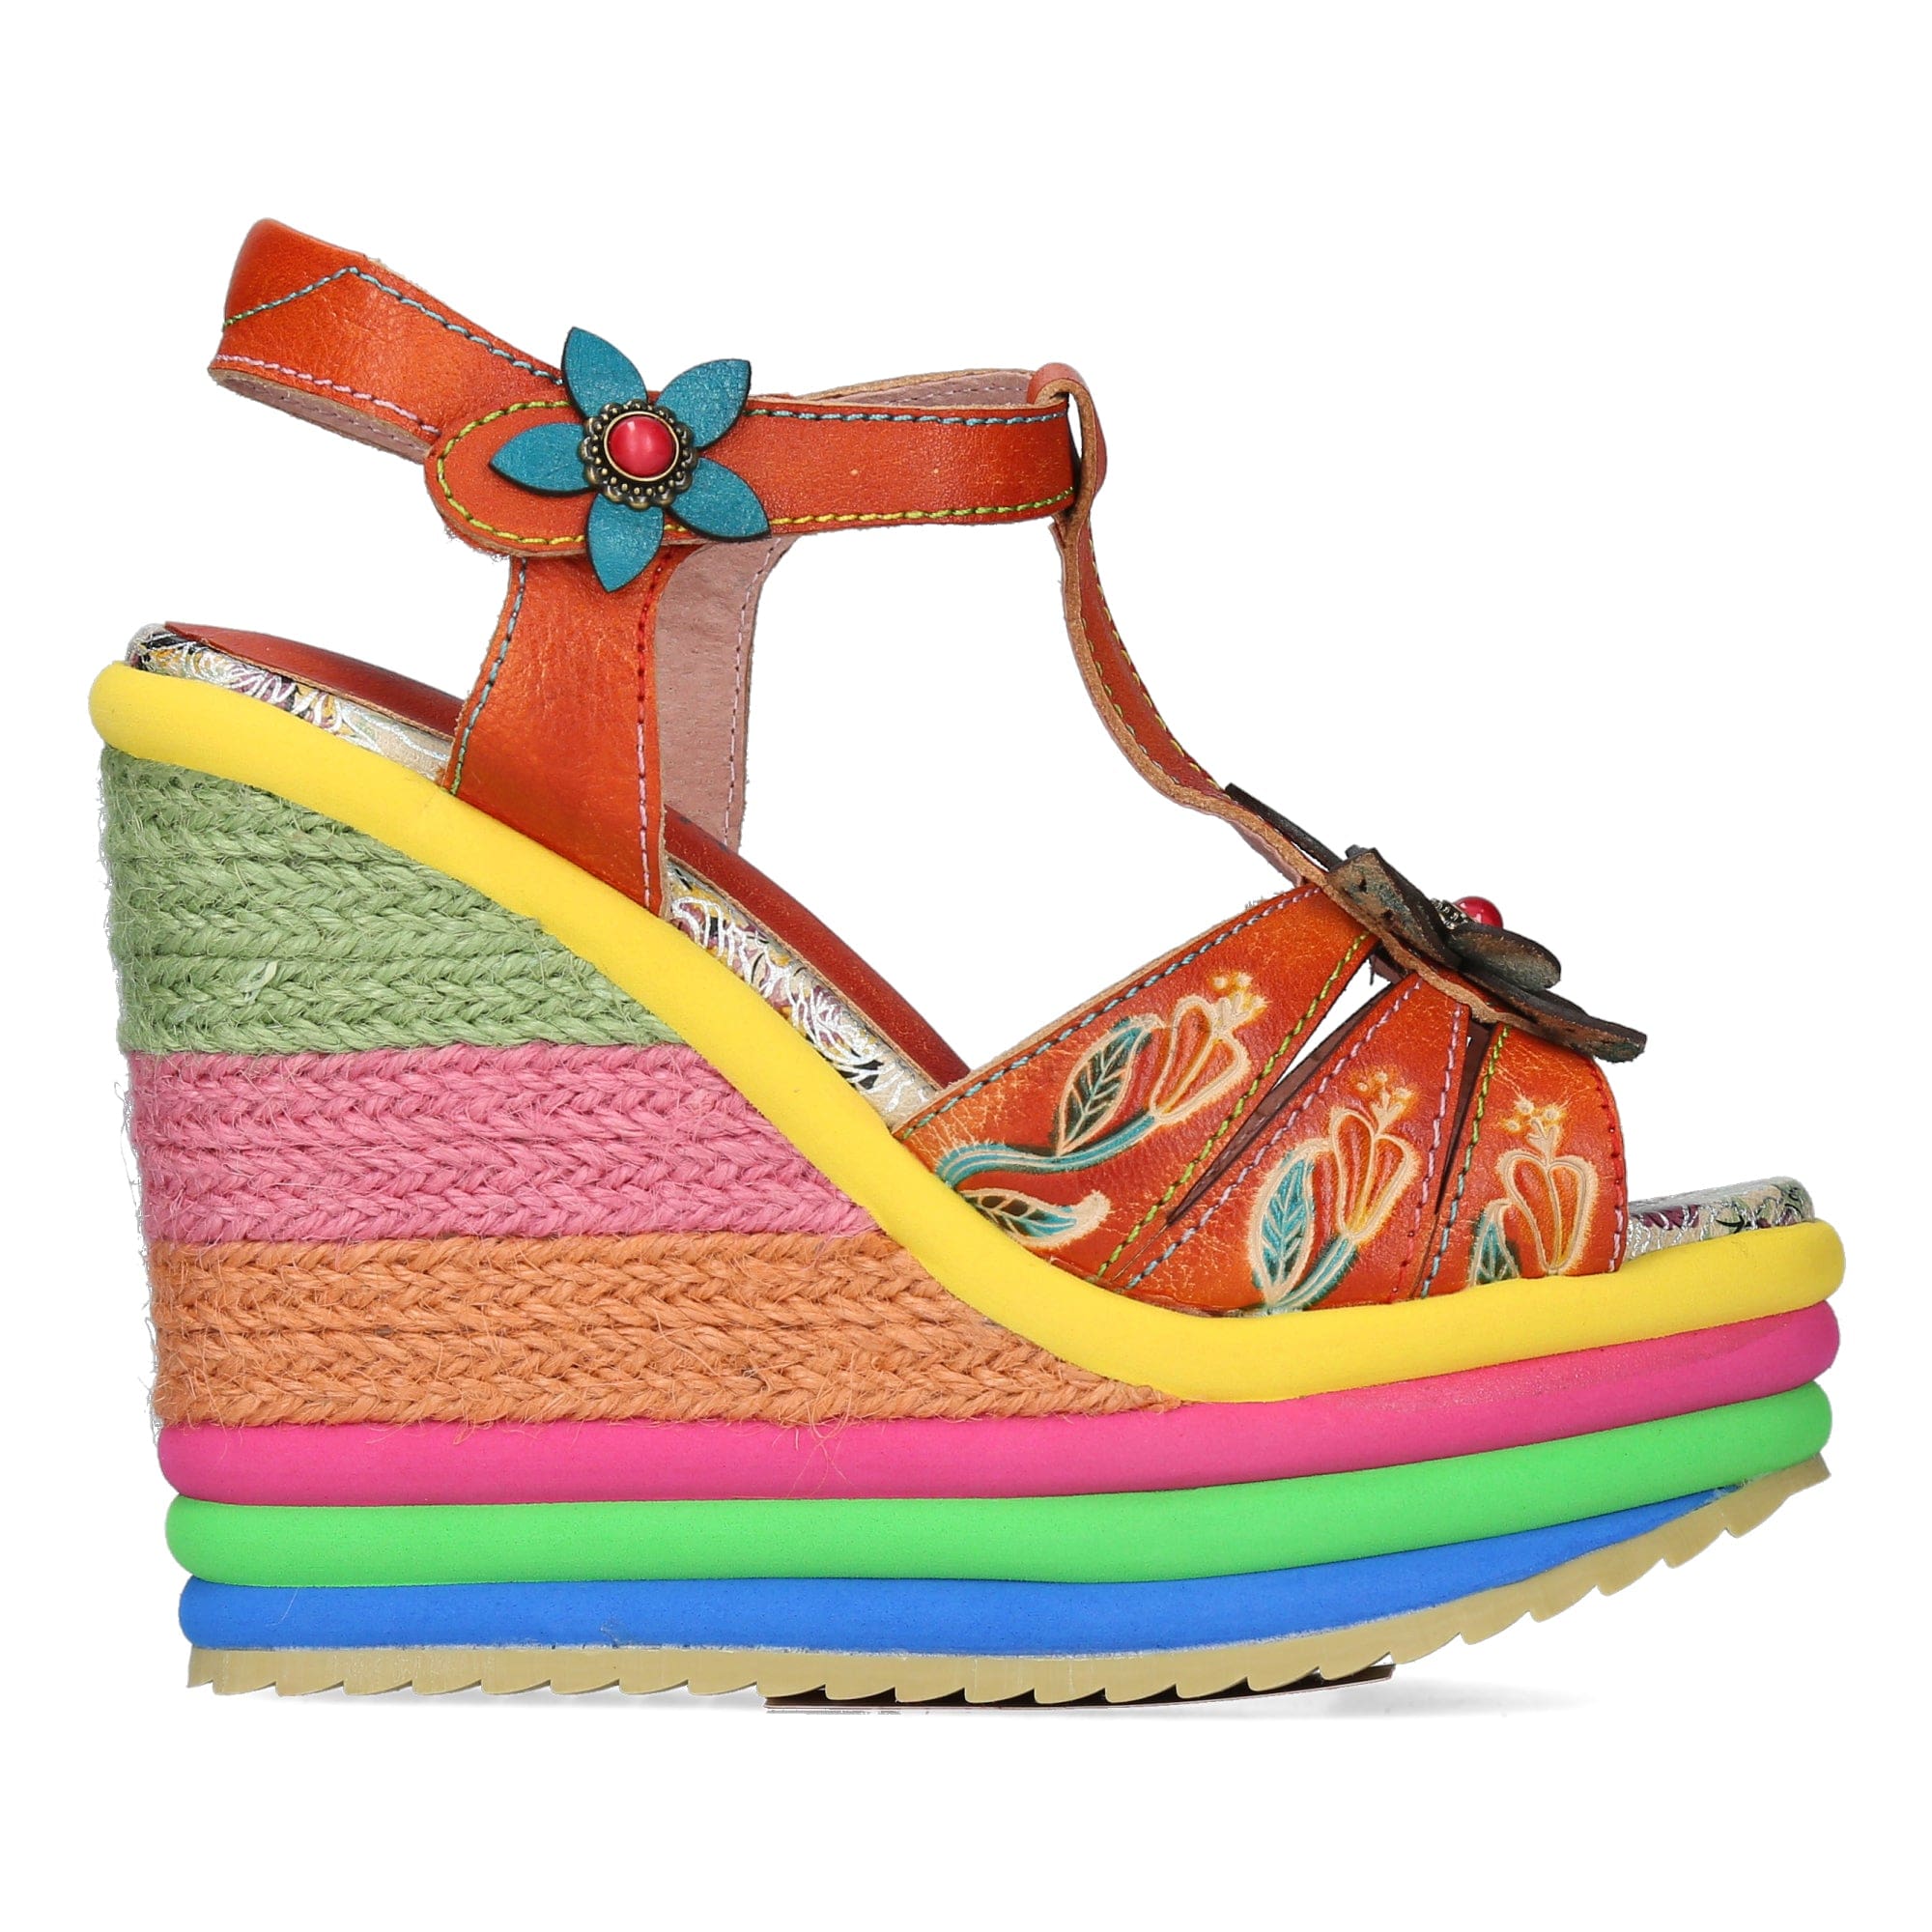 Schuhe LOUISEO 31 - 35 / Orange - Sandale